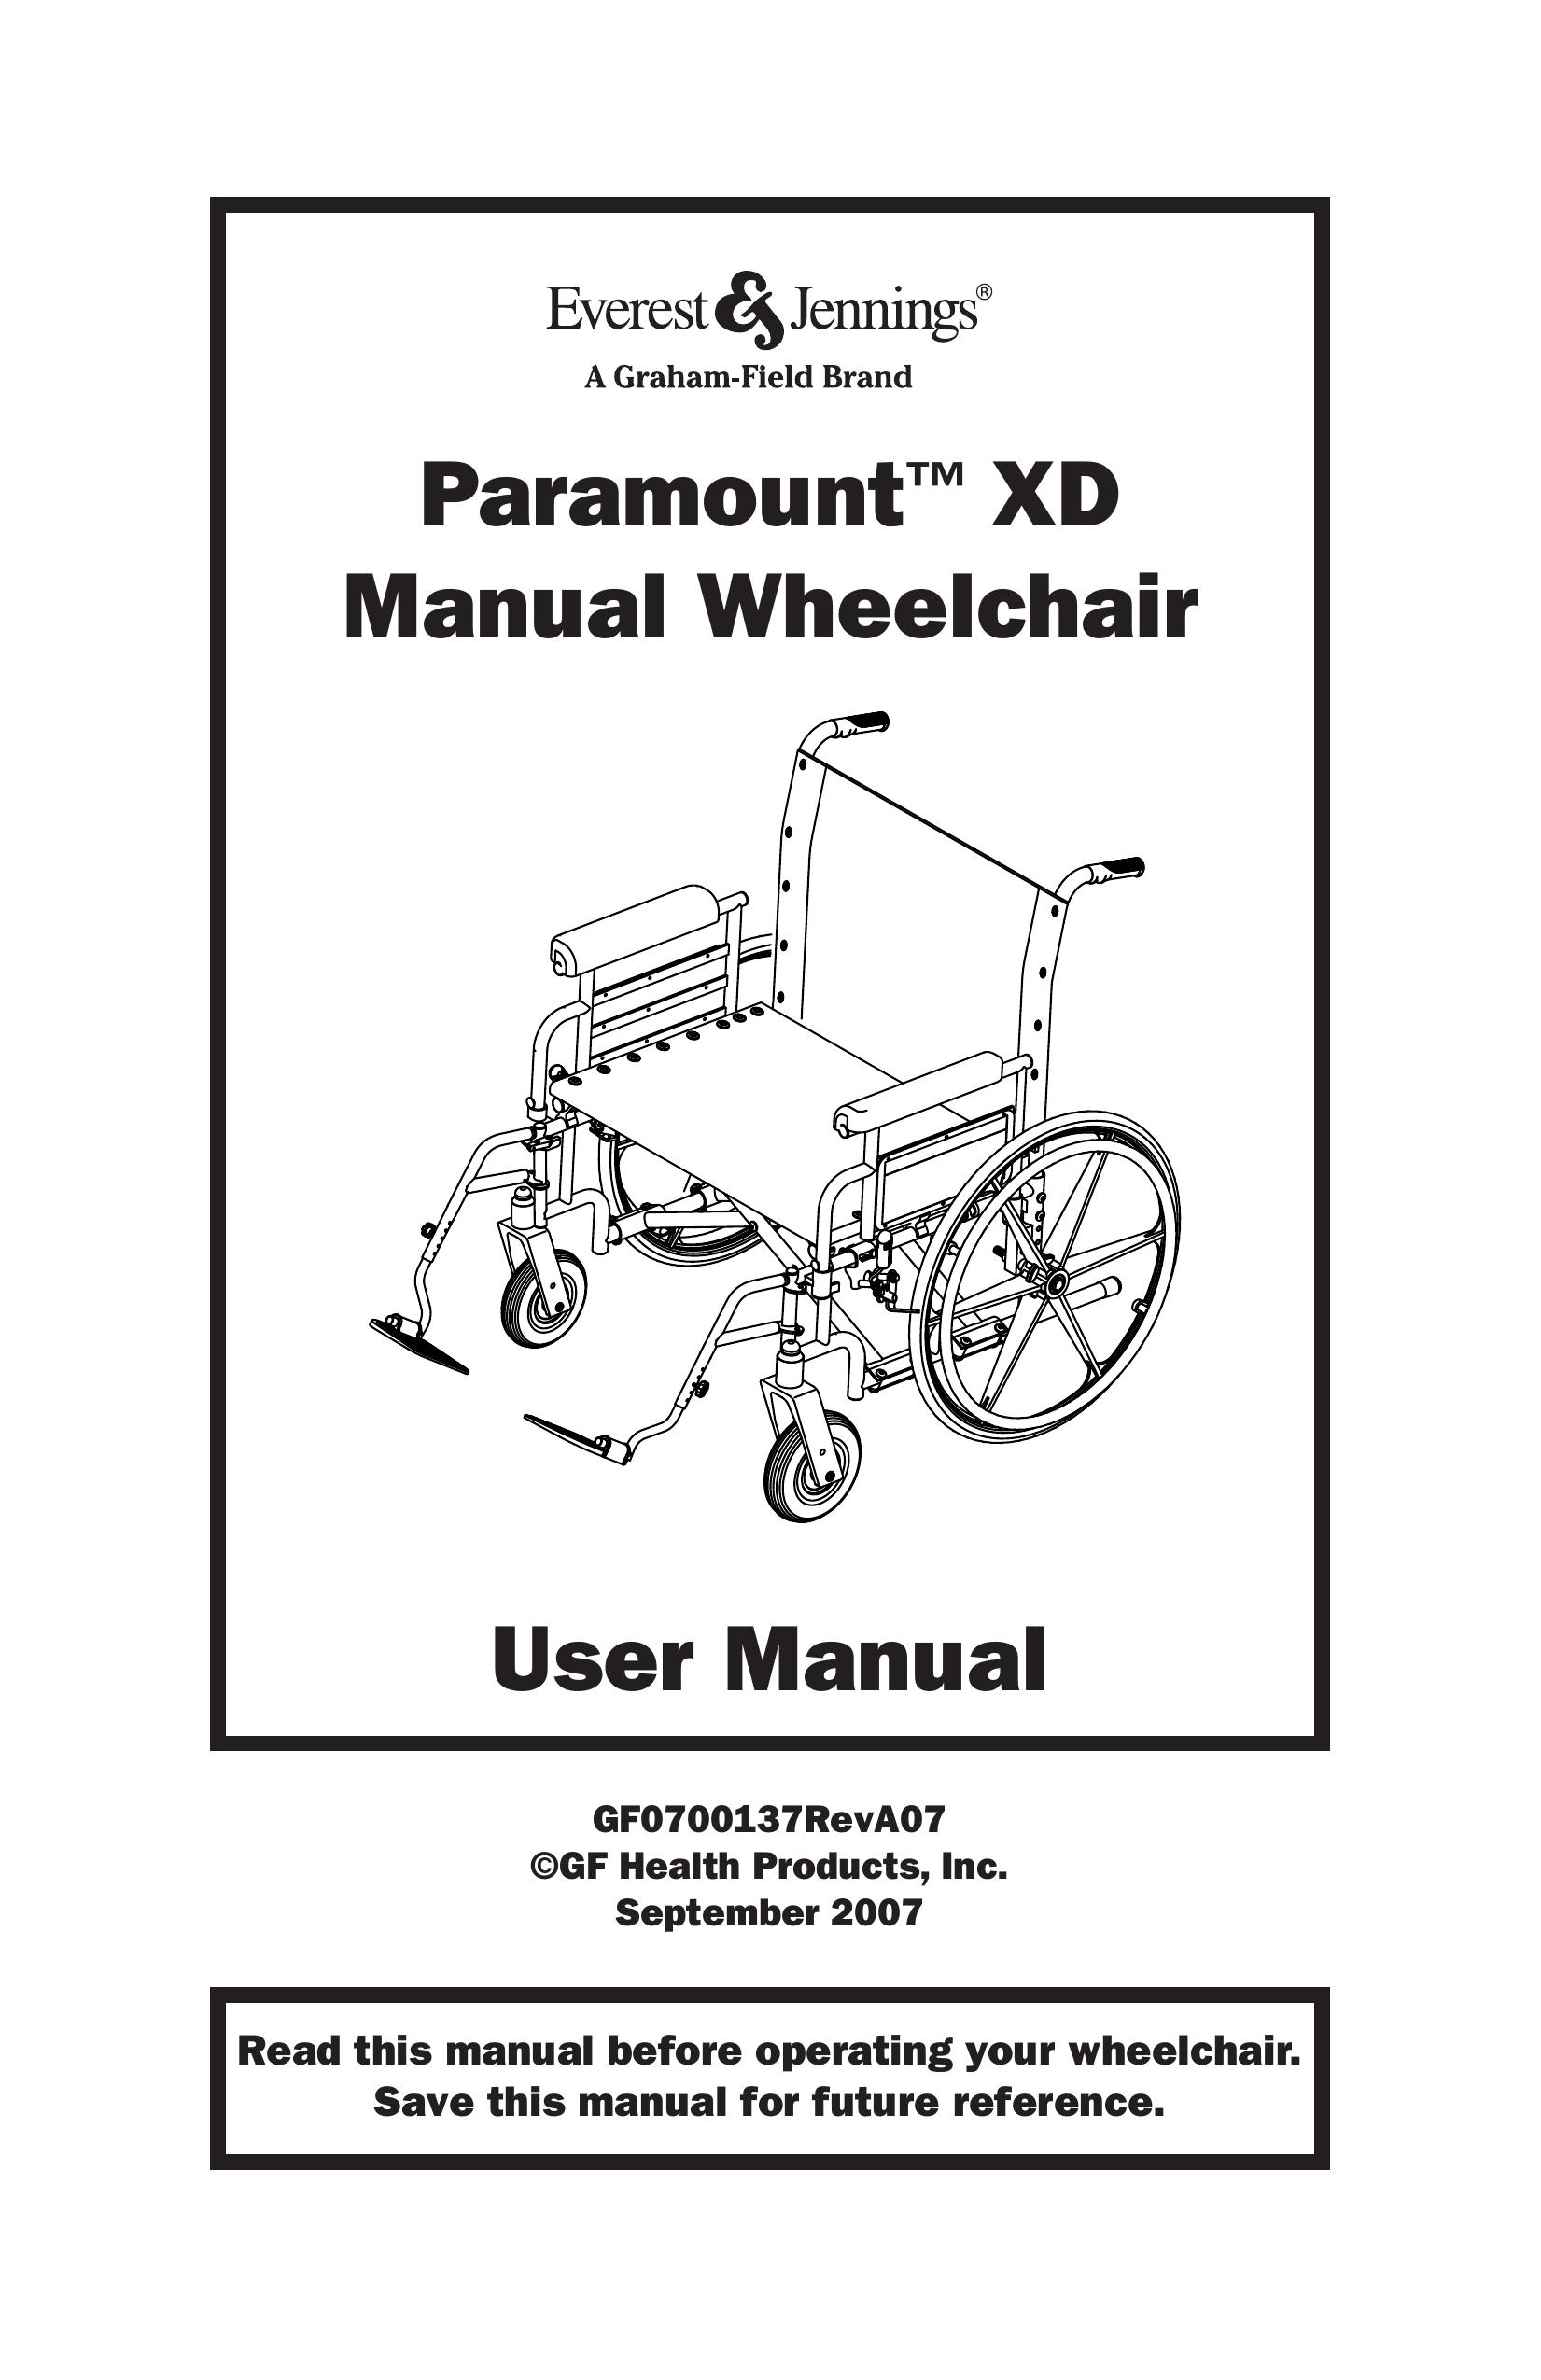 E&J GF0700137RevA07 Wheelchair User Manual